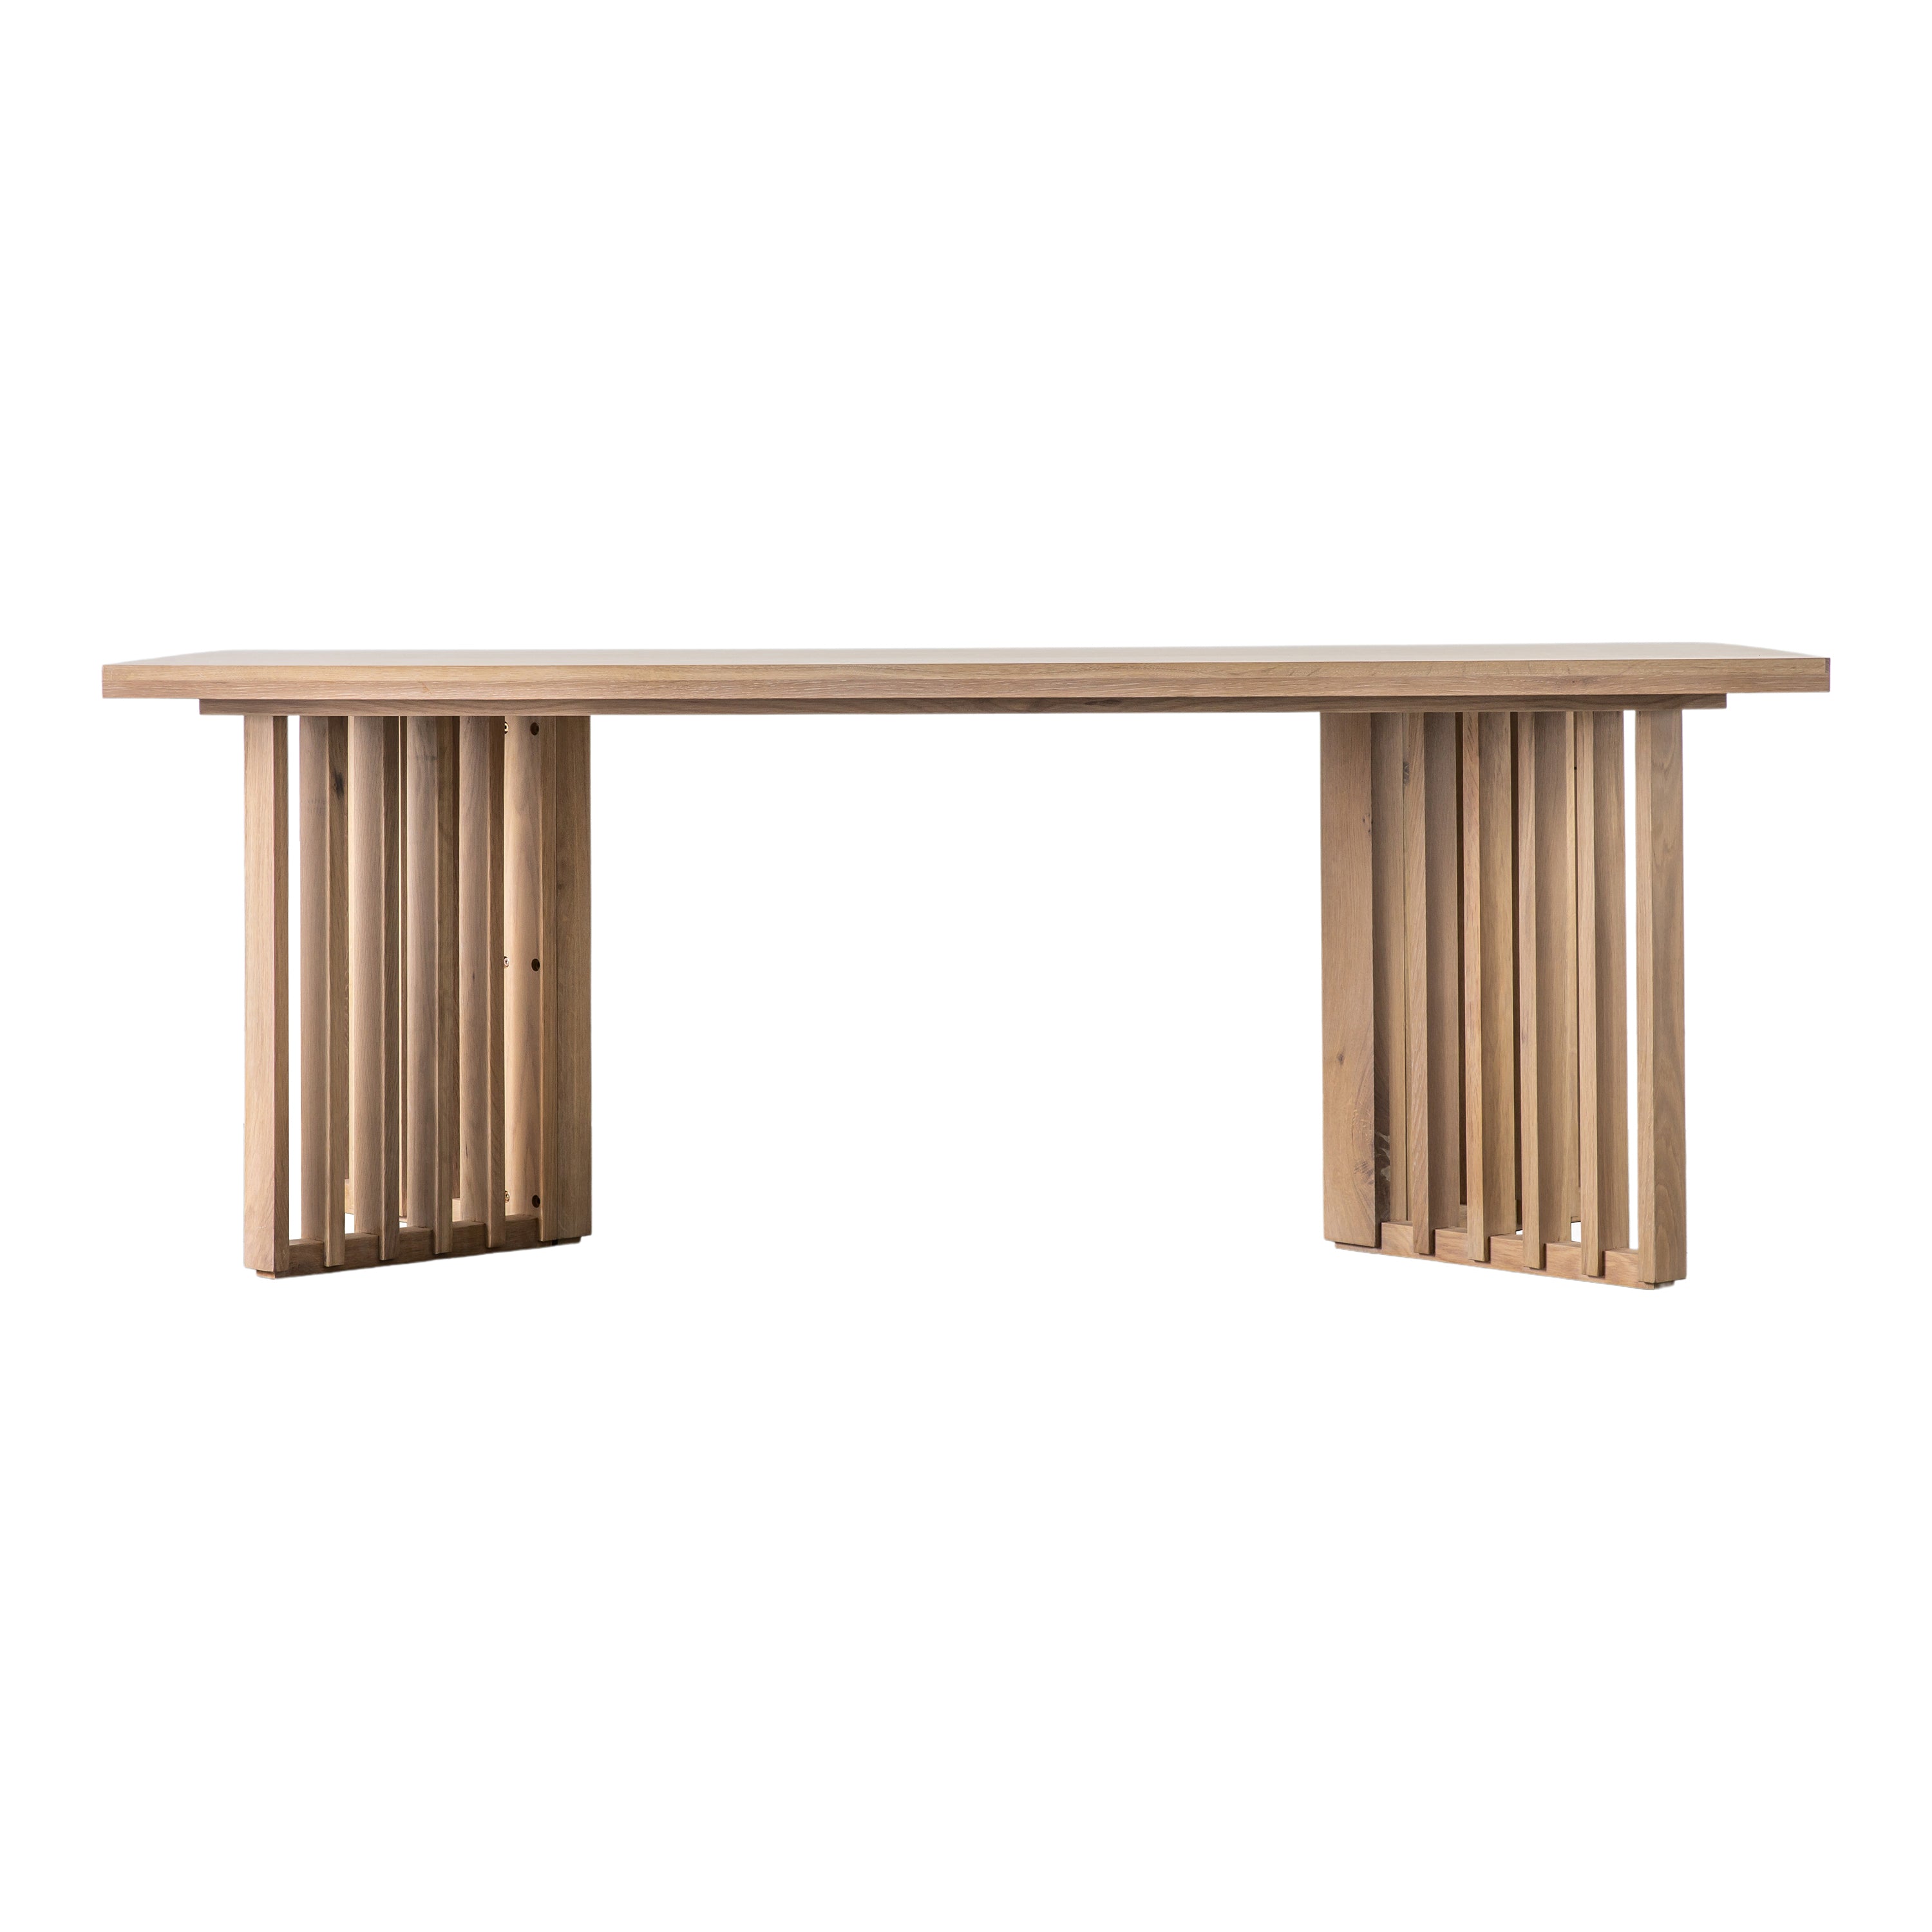 Haiku oak dining table with slatted base seats 6 to 8 people | MalletandPlane.com